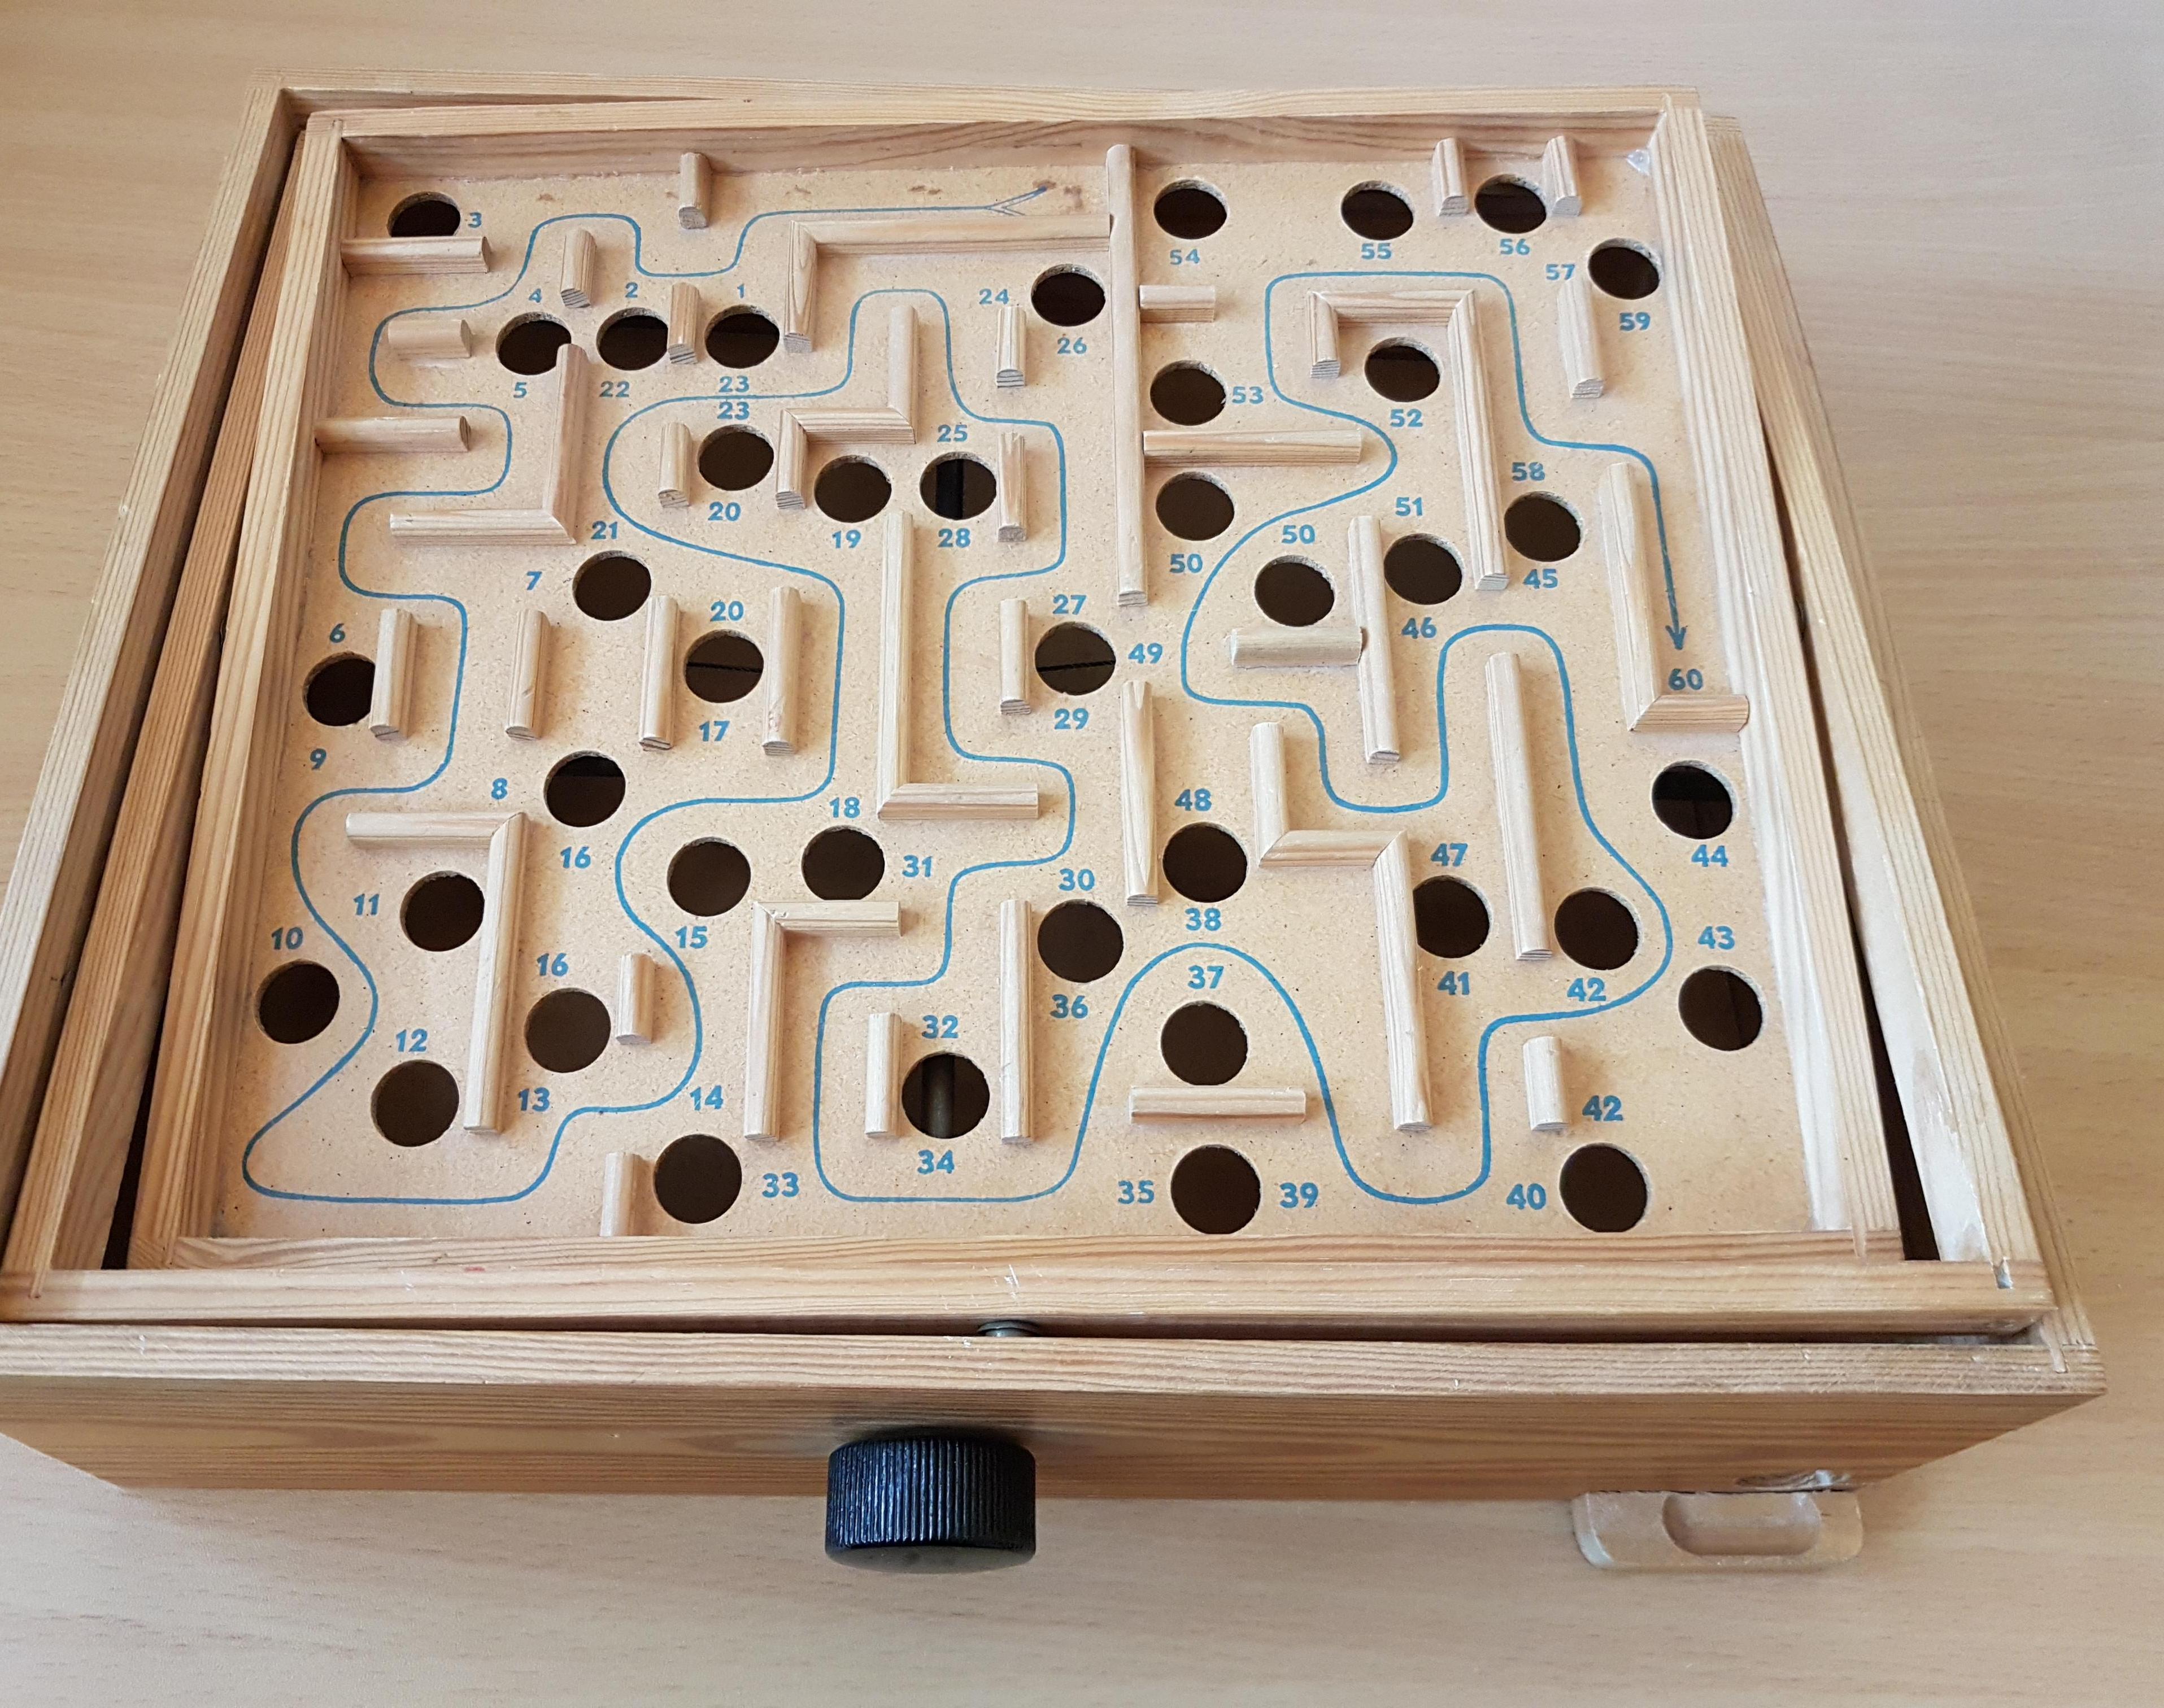 Beginner's Set for Vintage Brio Labyrinth Puzzle Game